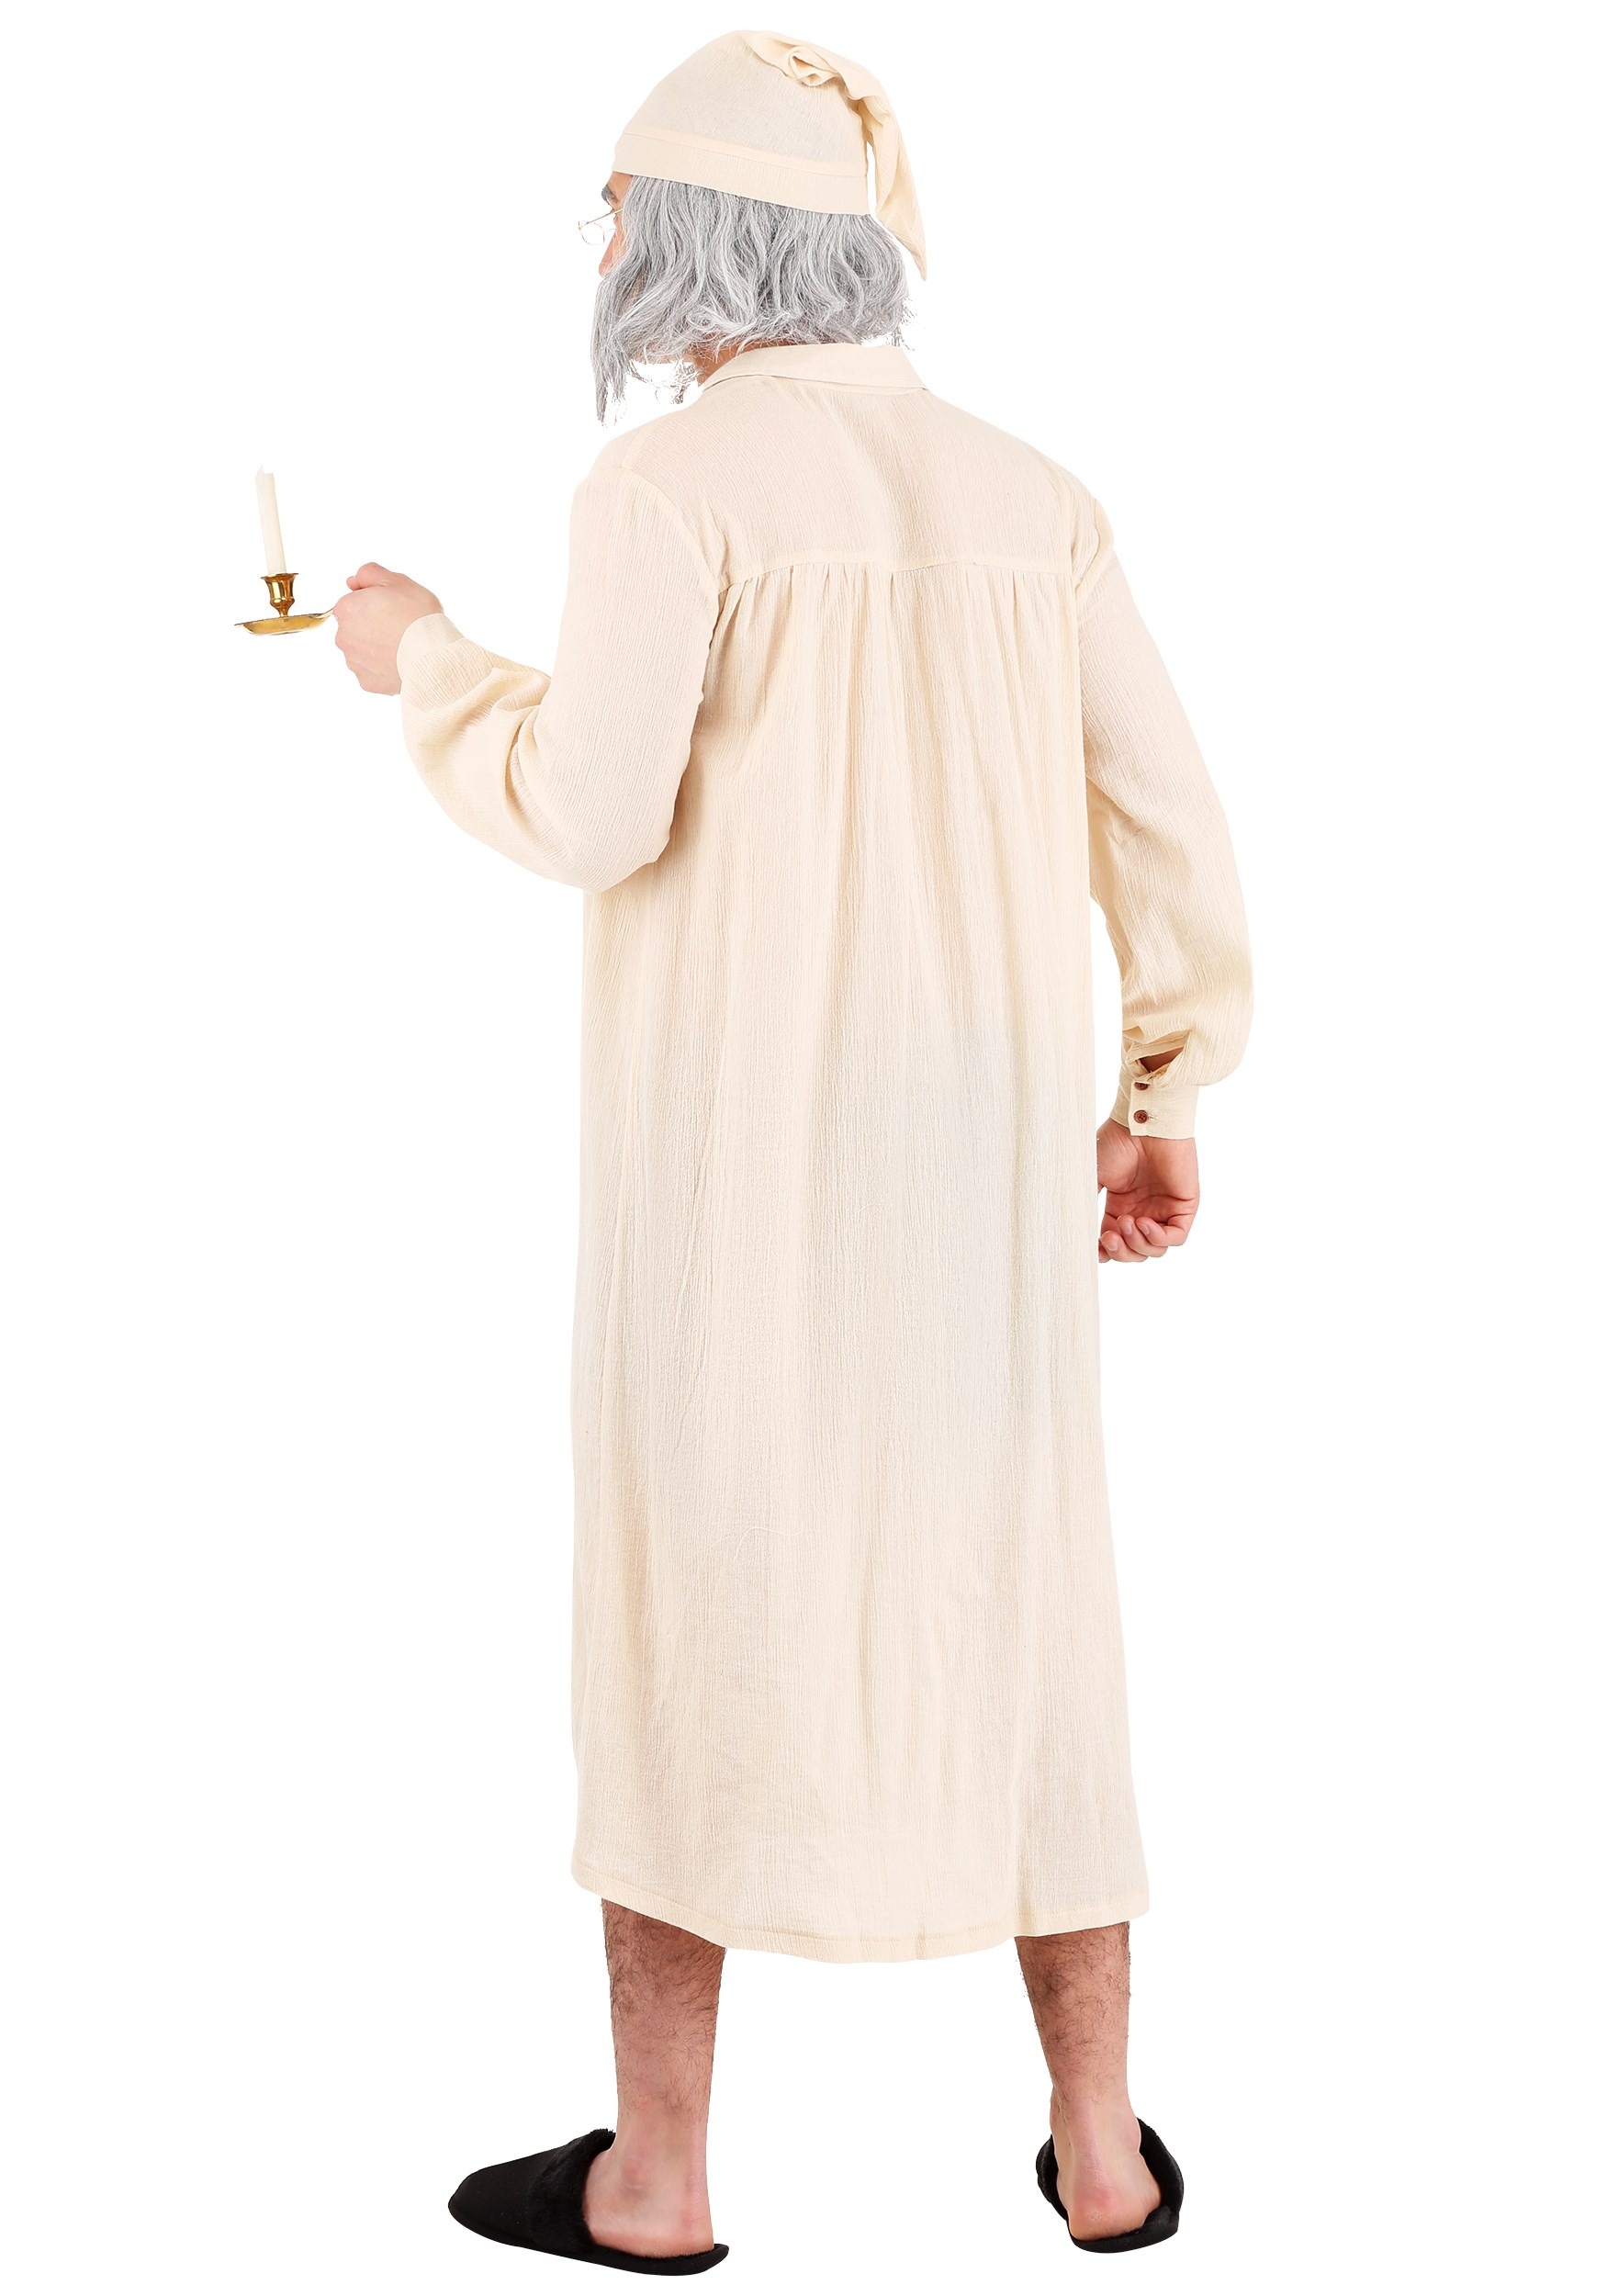 Humbug Nightgown Men's  Fancy Dress Costume